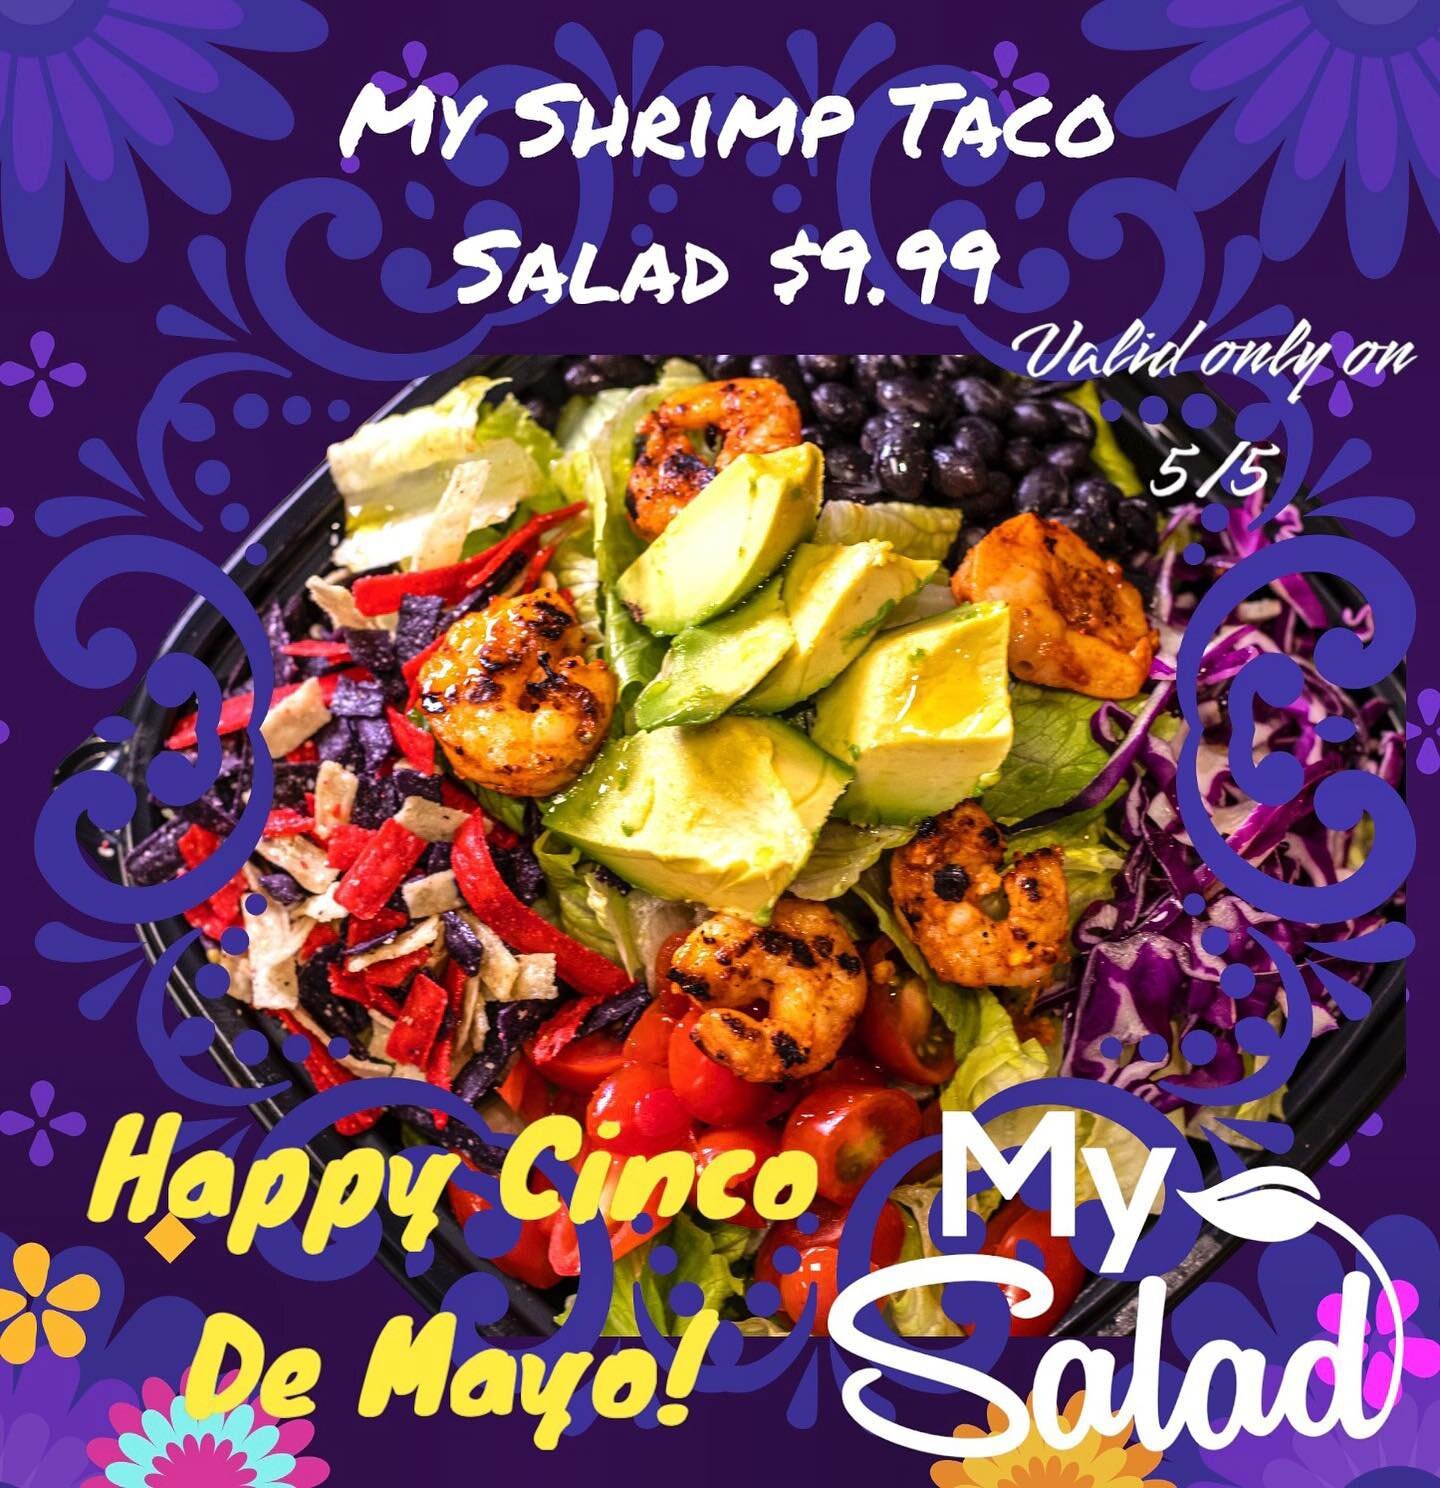 Happy Cinco De Mayo! We are here to help you saladbrate with My  delicious Shrimp Taco Salad! #cincodemayo #nationalsaladmonth #eatwelllookgoodfeelgreat #healthylunch